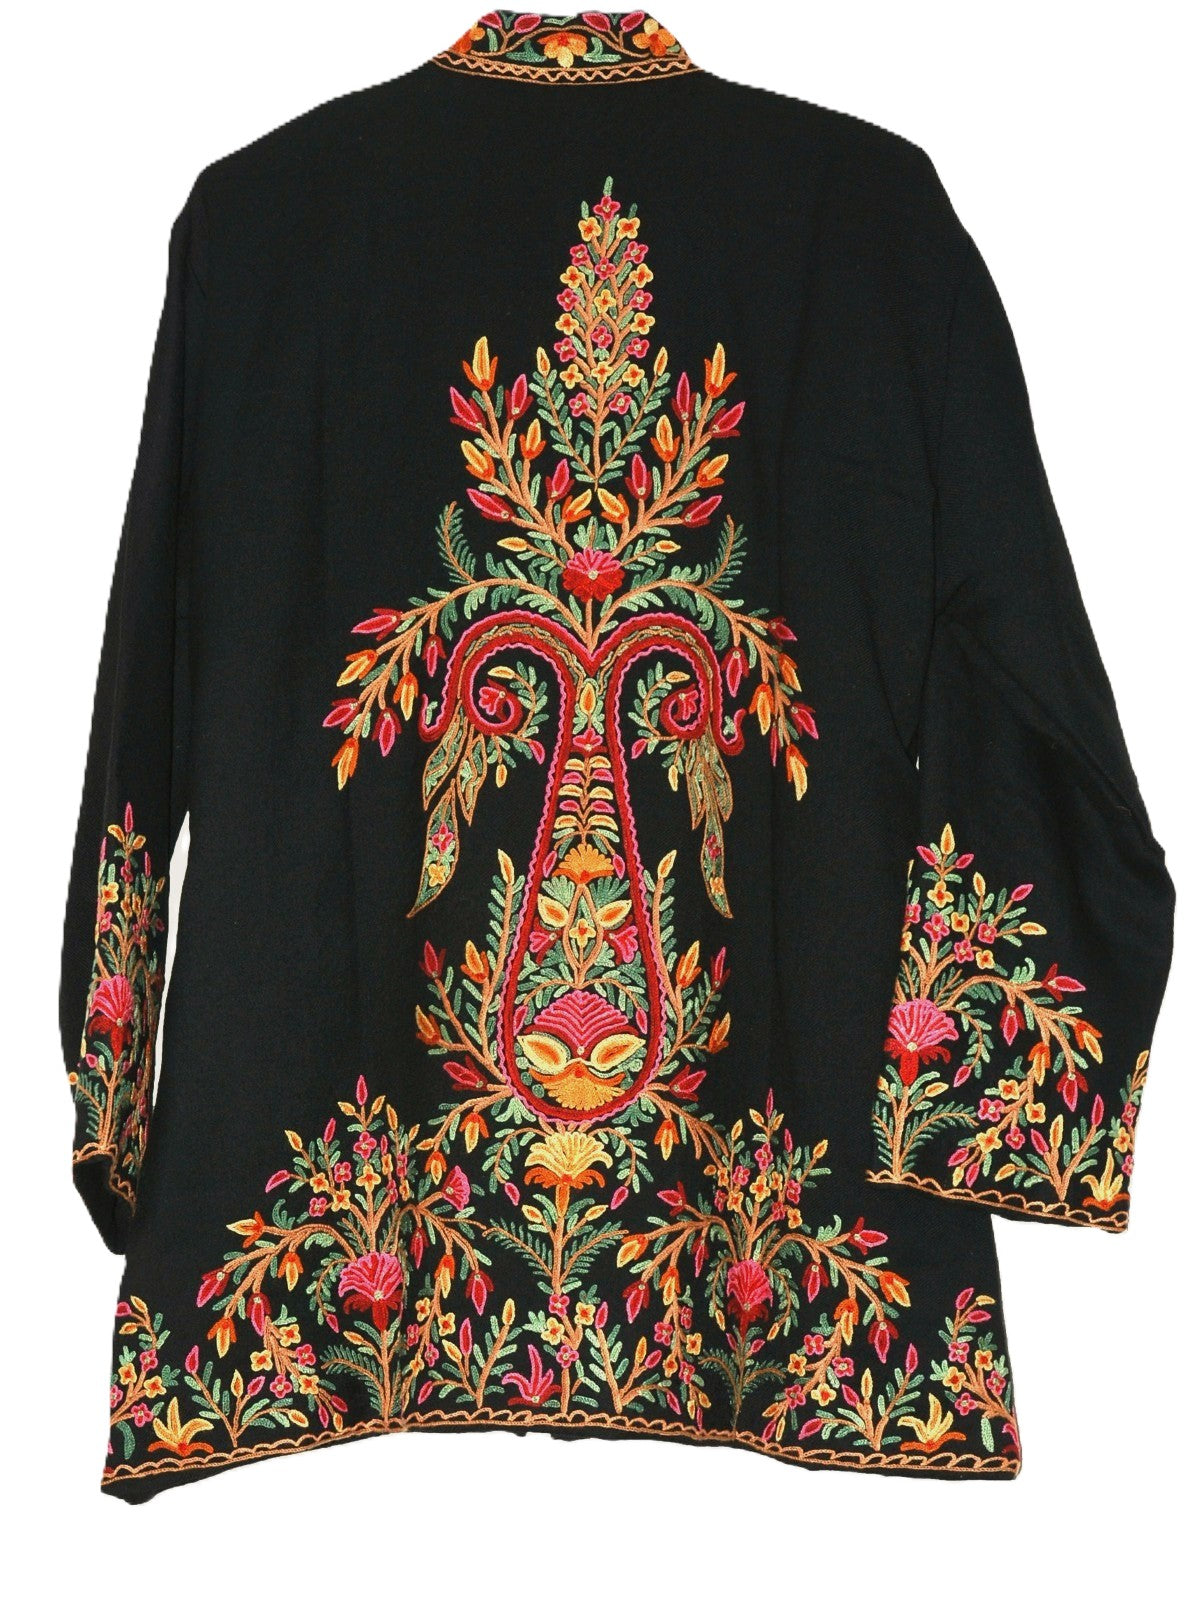 Embroidered Jacket Woolen Short Jacket Black, Multicolor Embroidery #AO-003